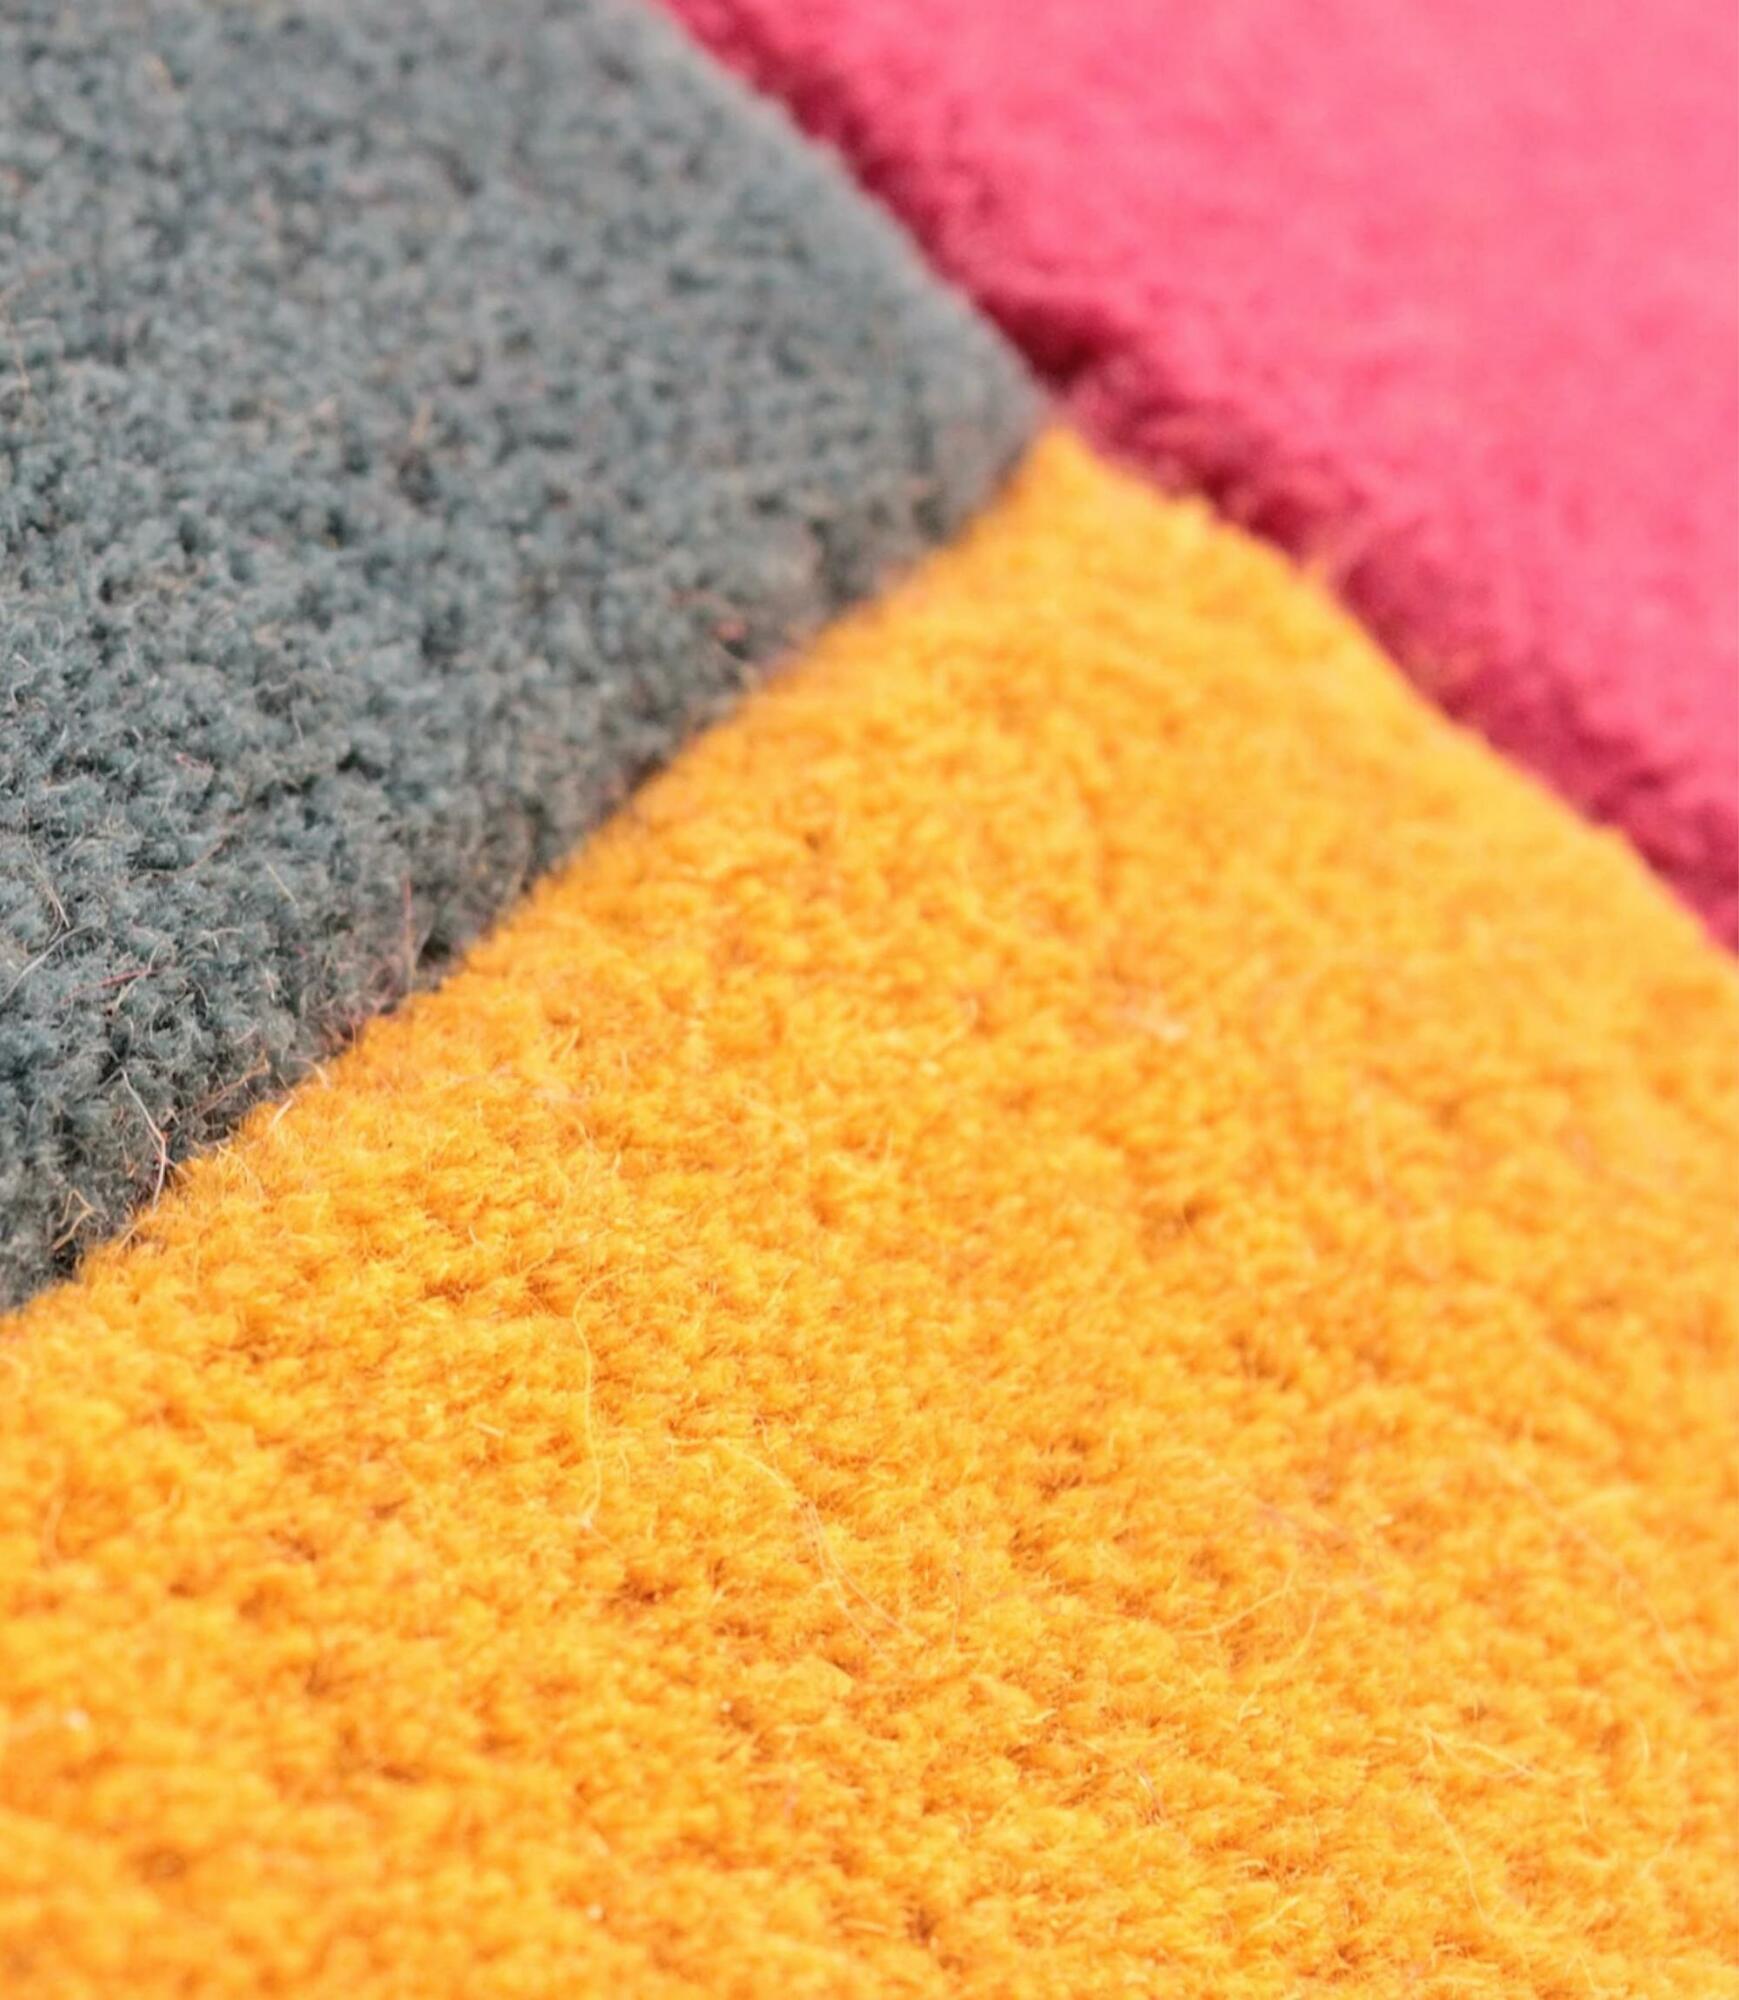 Teppich Wolle Mehrfarbig 1